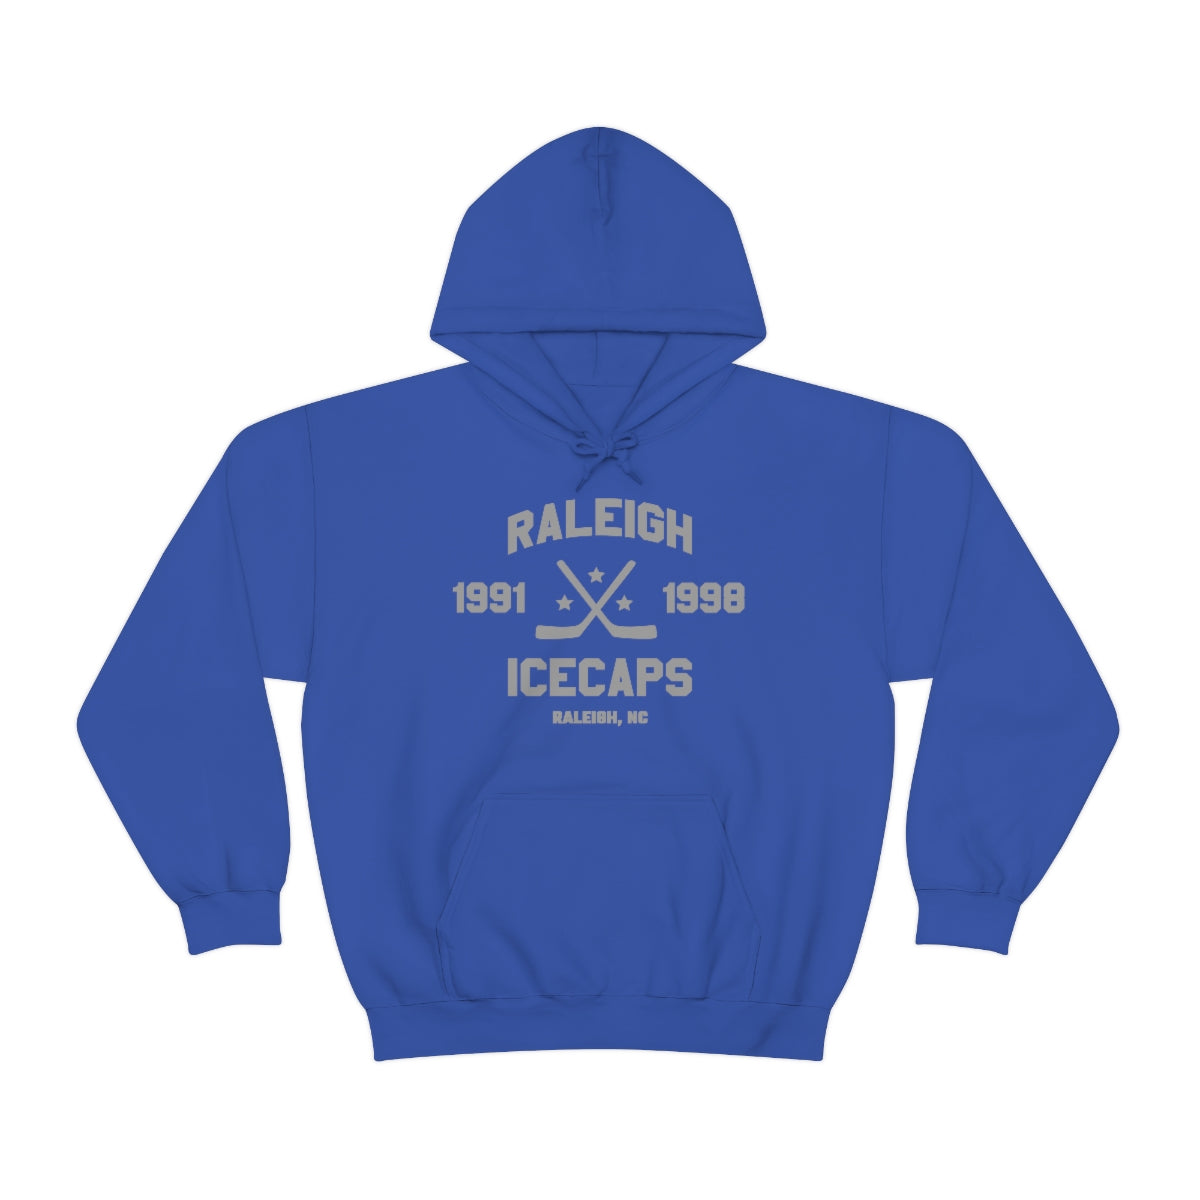 Raleigh IceCaps, Vintage Hockey Apparel